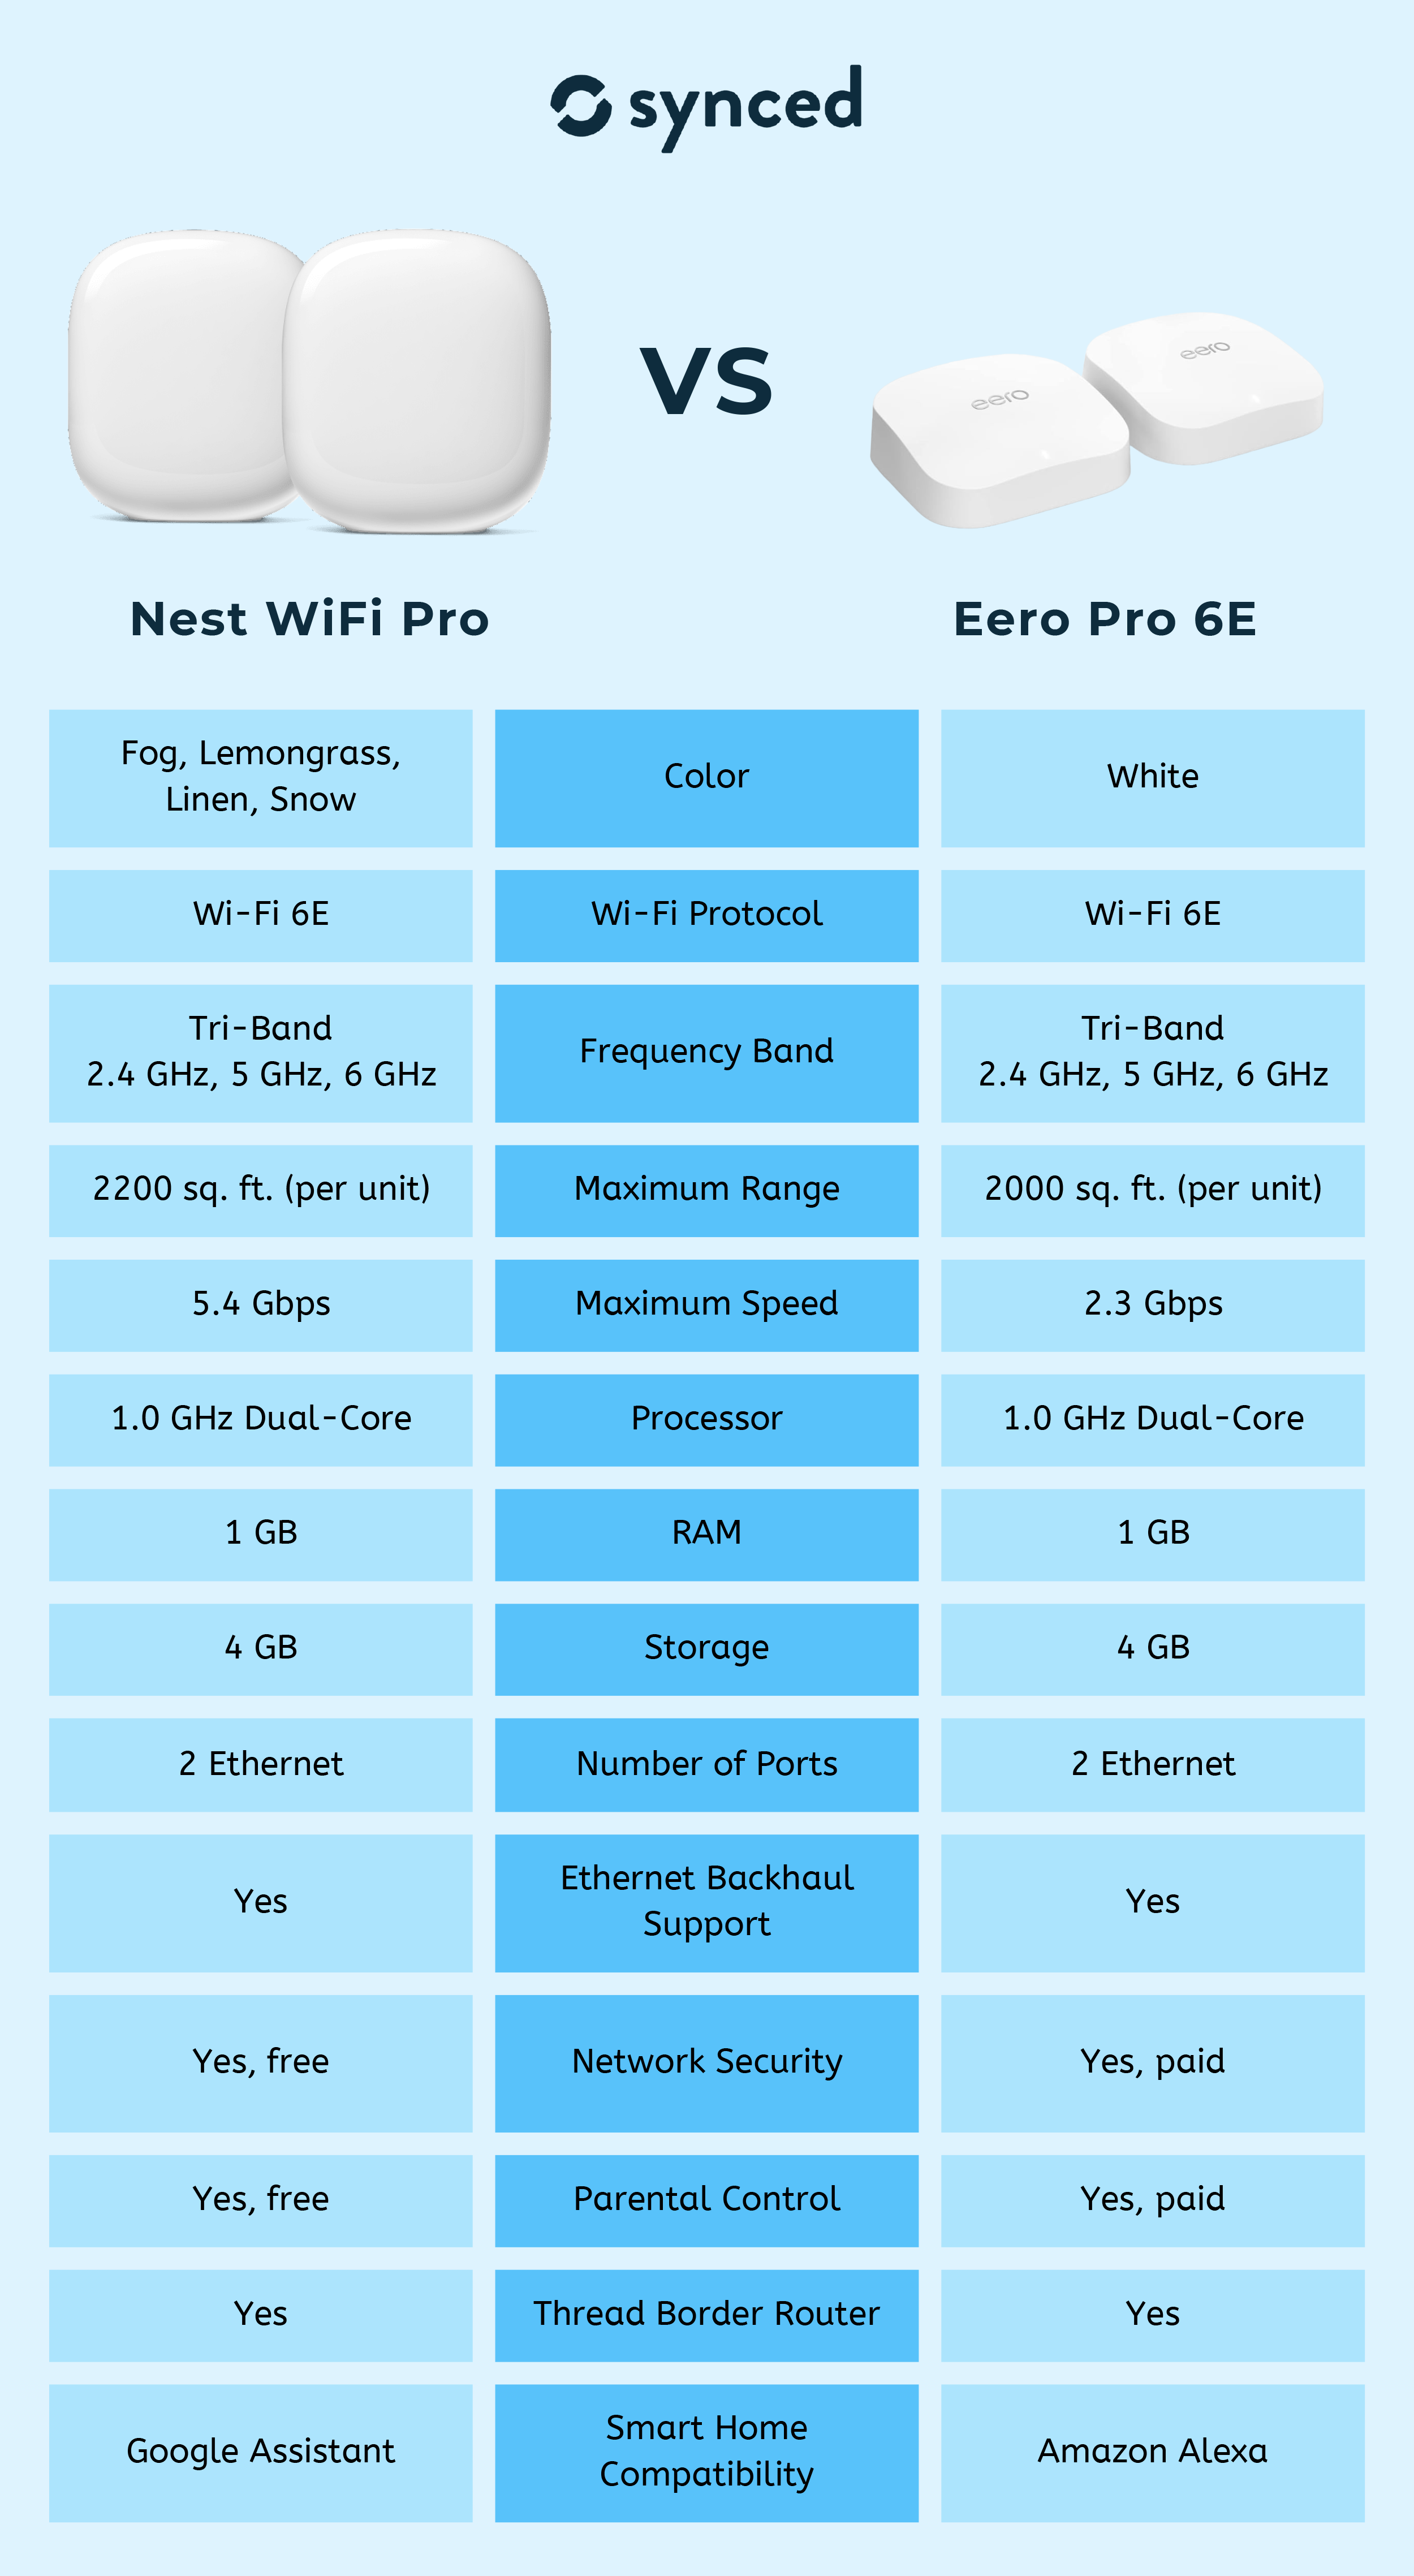 Nest WiFi Pro vs Eero Pro 6E